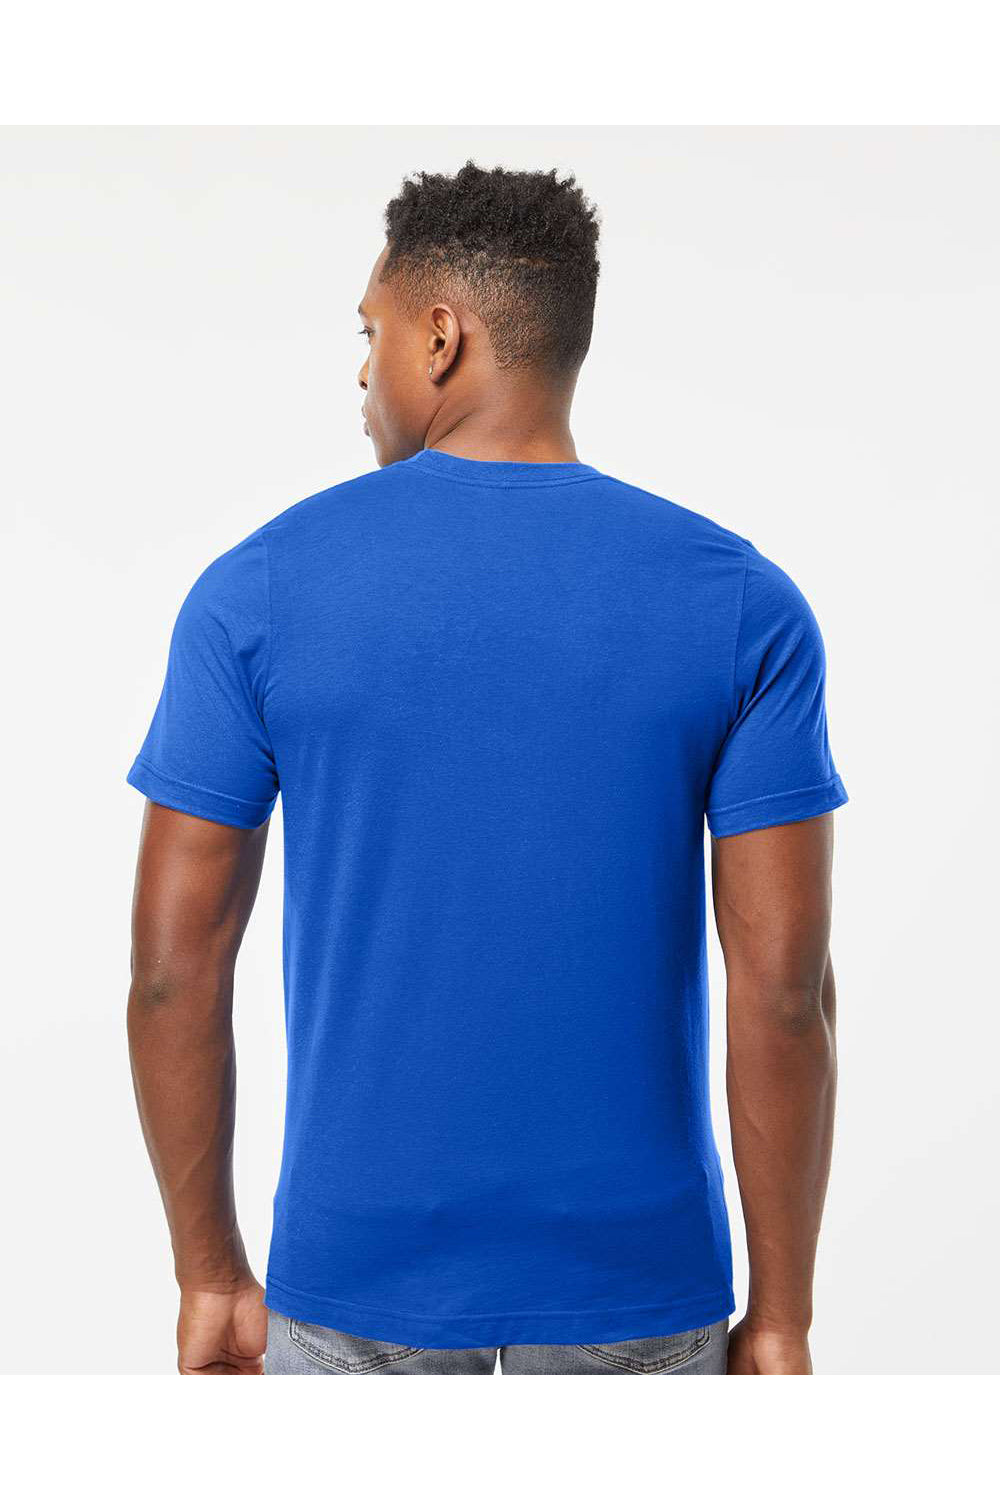 Tultex 502 Mens Premium Short Sleeve Crewneck T-Shirt Royal Blue Model Back